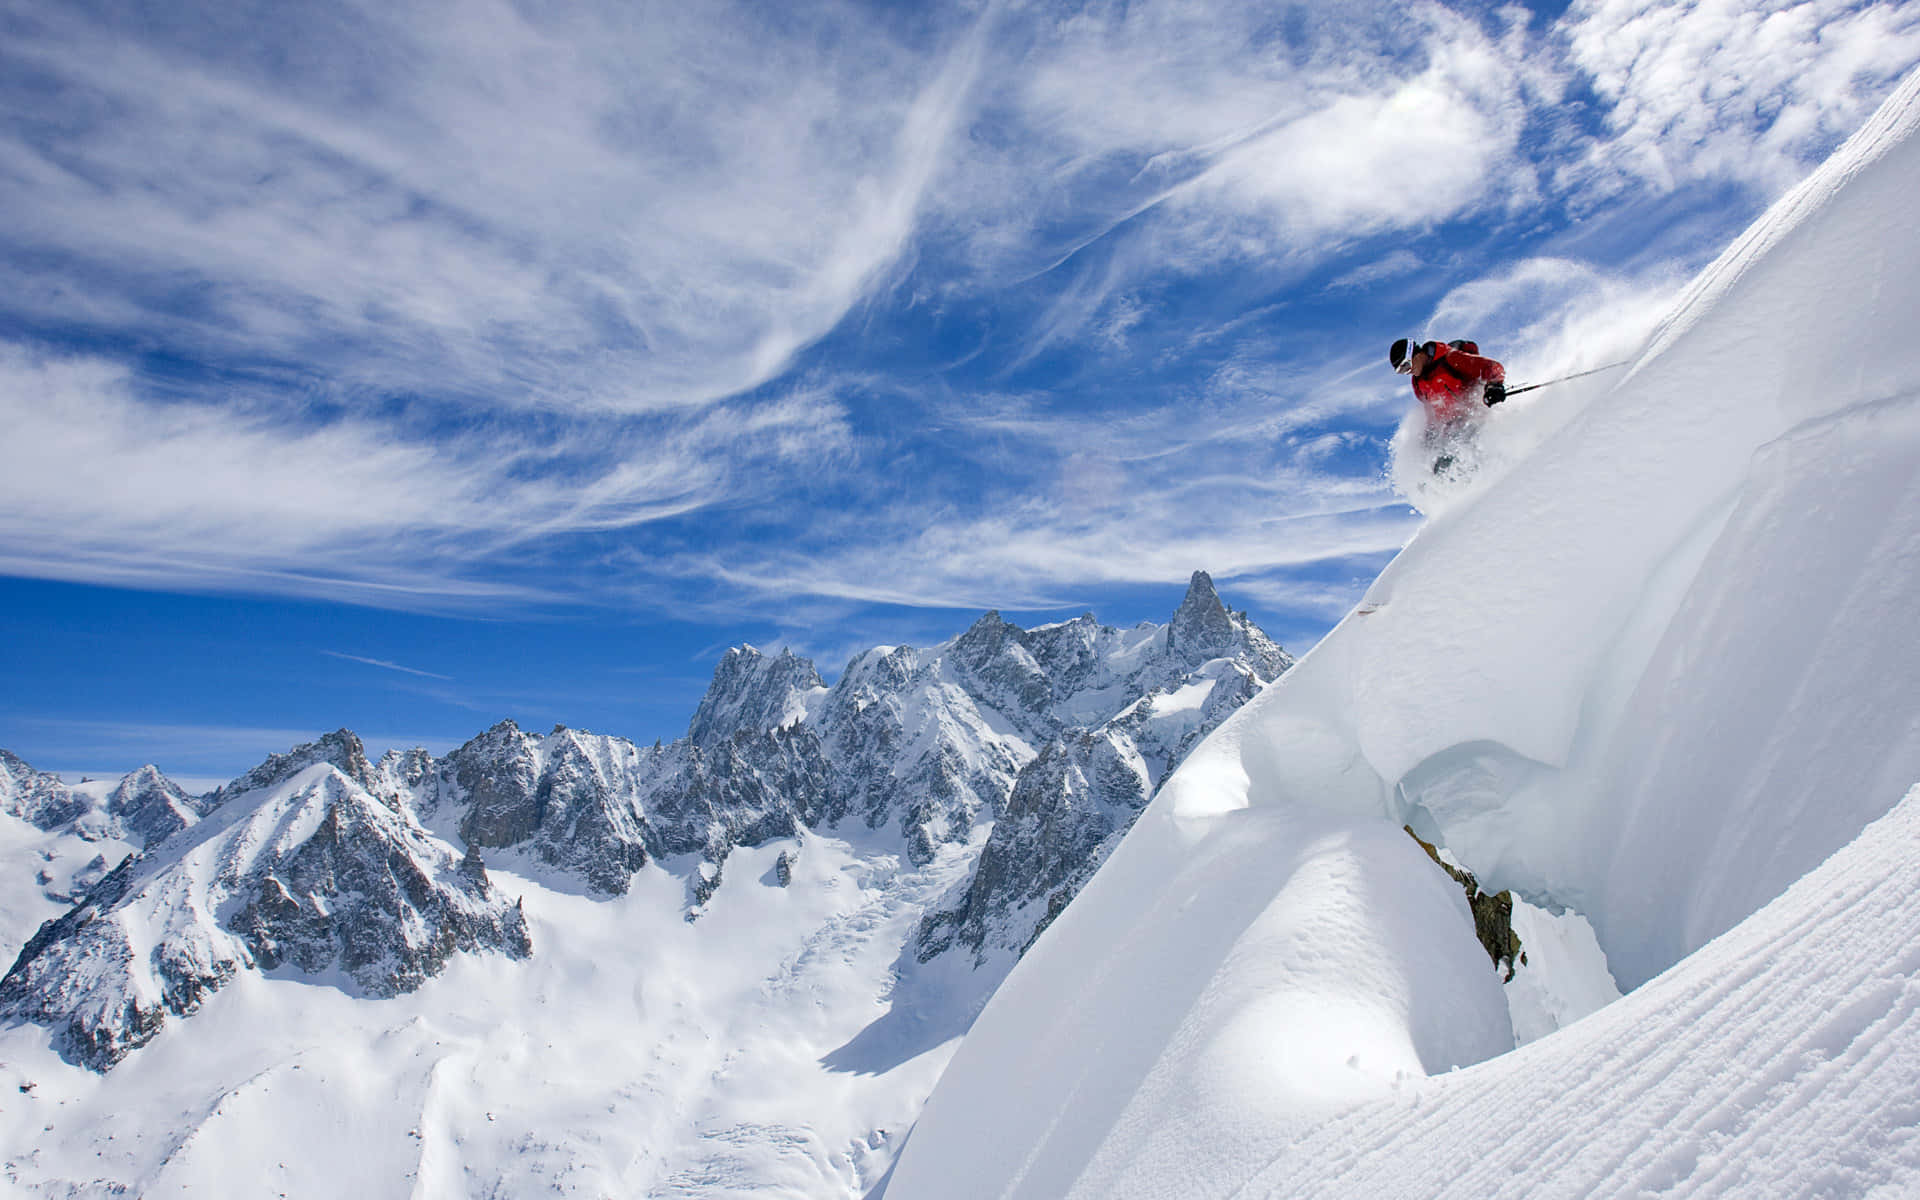 Adventurous Skier Descending a Snowy Mountain Slope